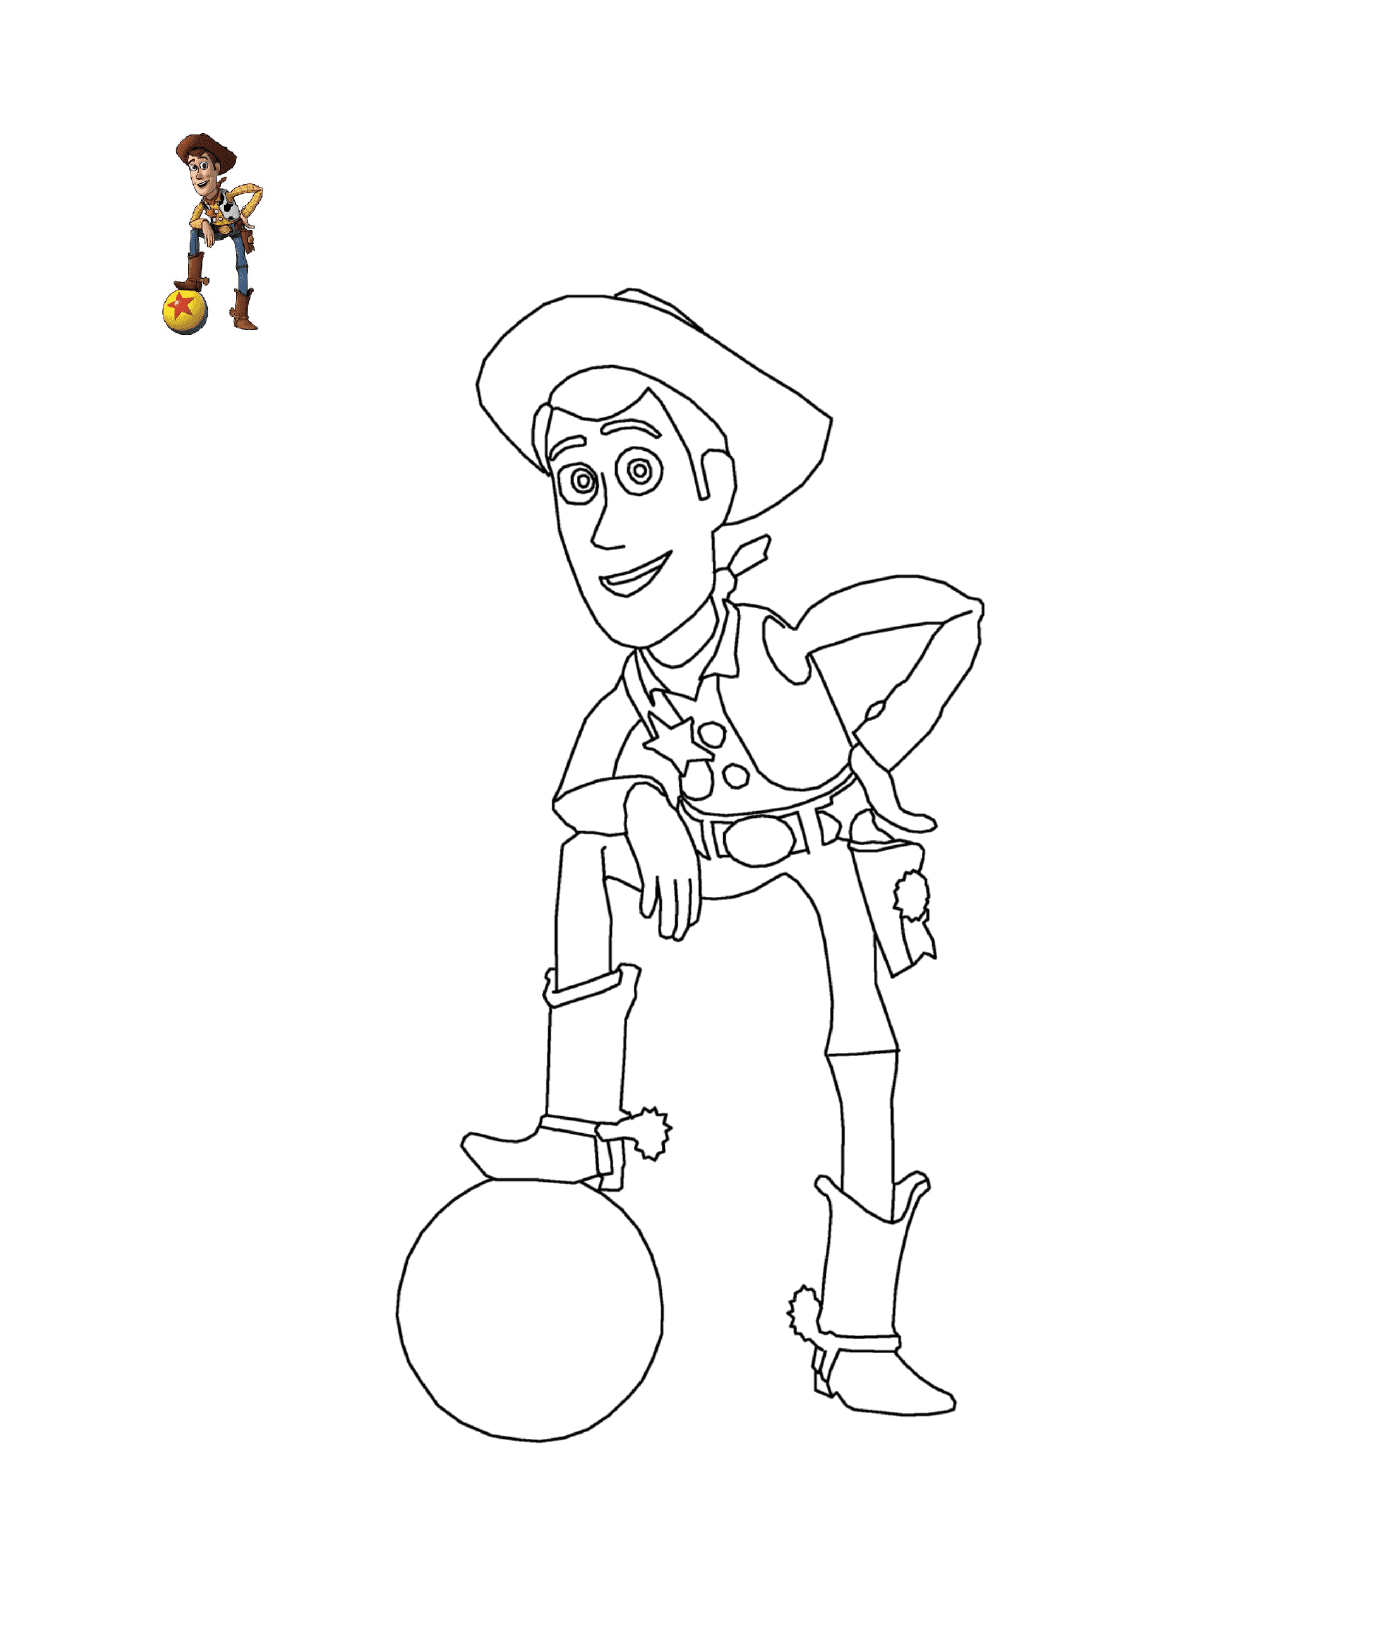  Sheriff Woody of Disney Toy Story 